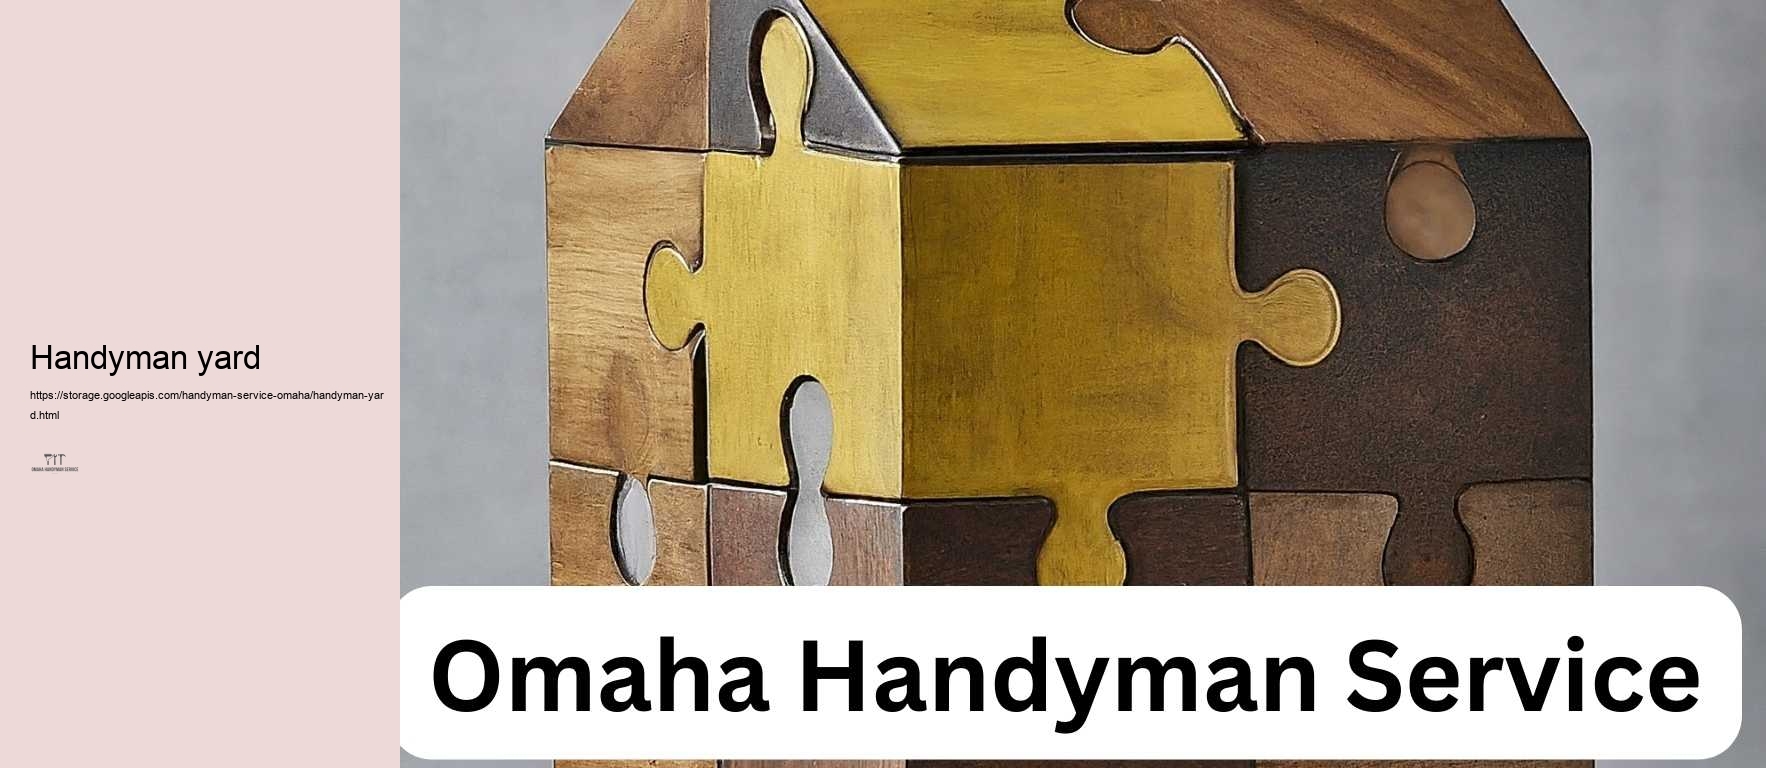 Handyman yard